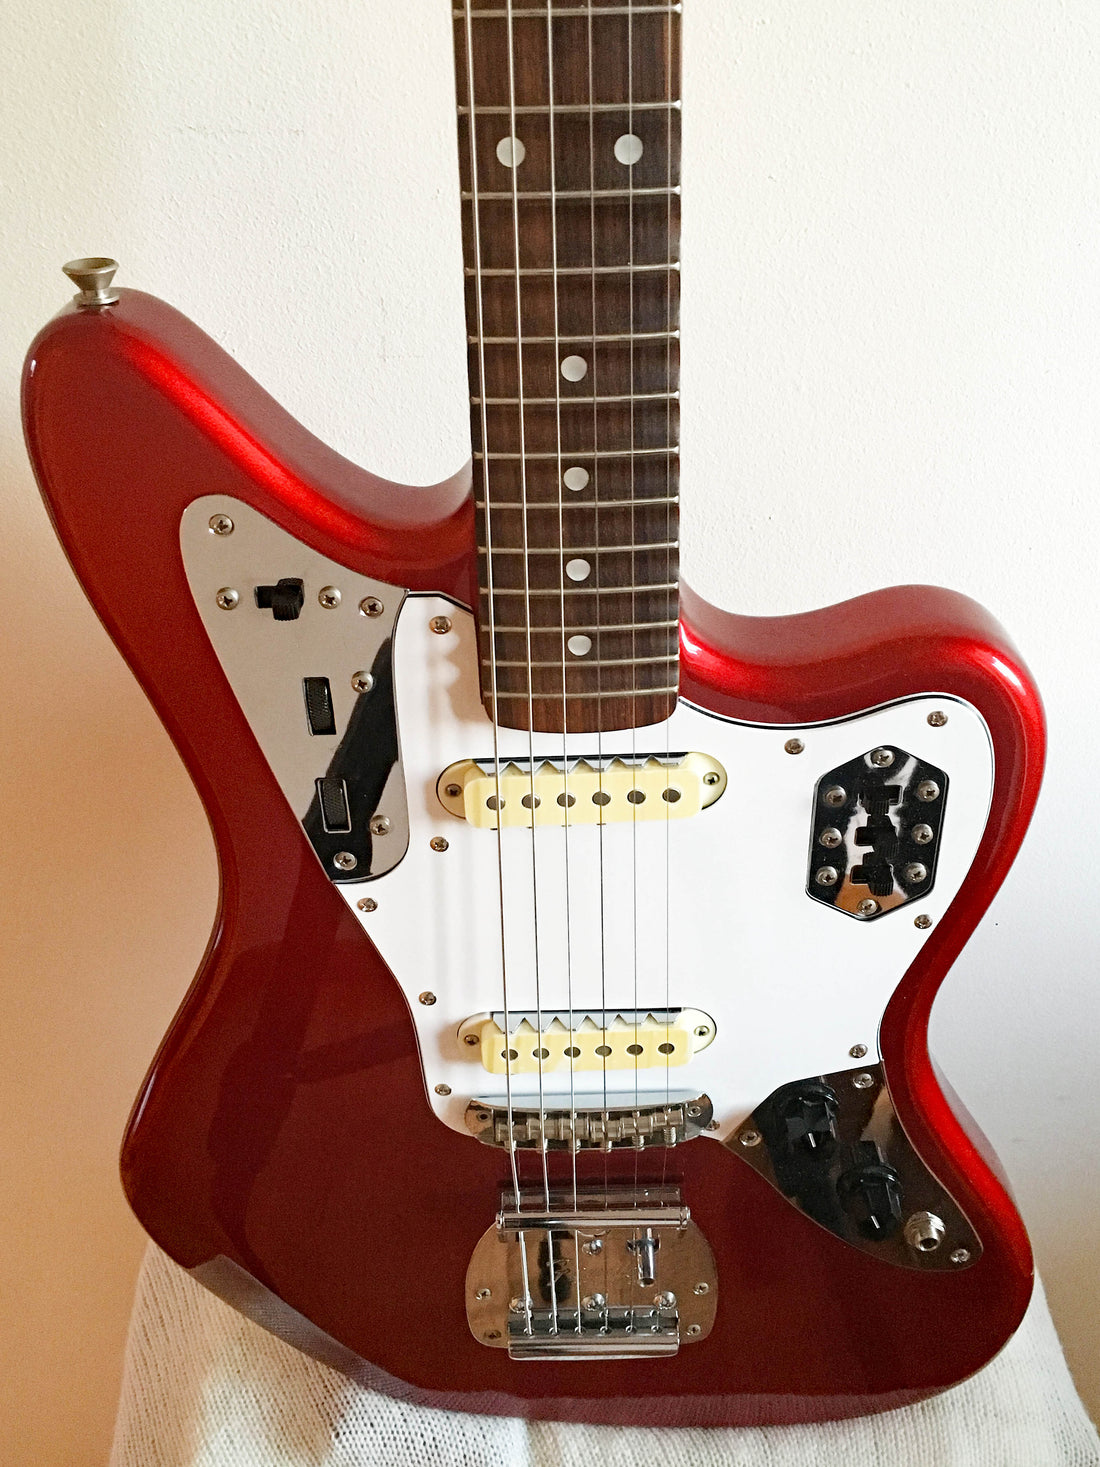 Used Fender Modded Jaguar '66 Reissue Candy Apple Red